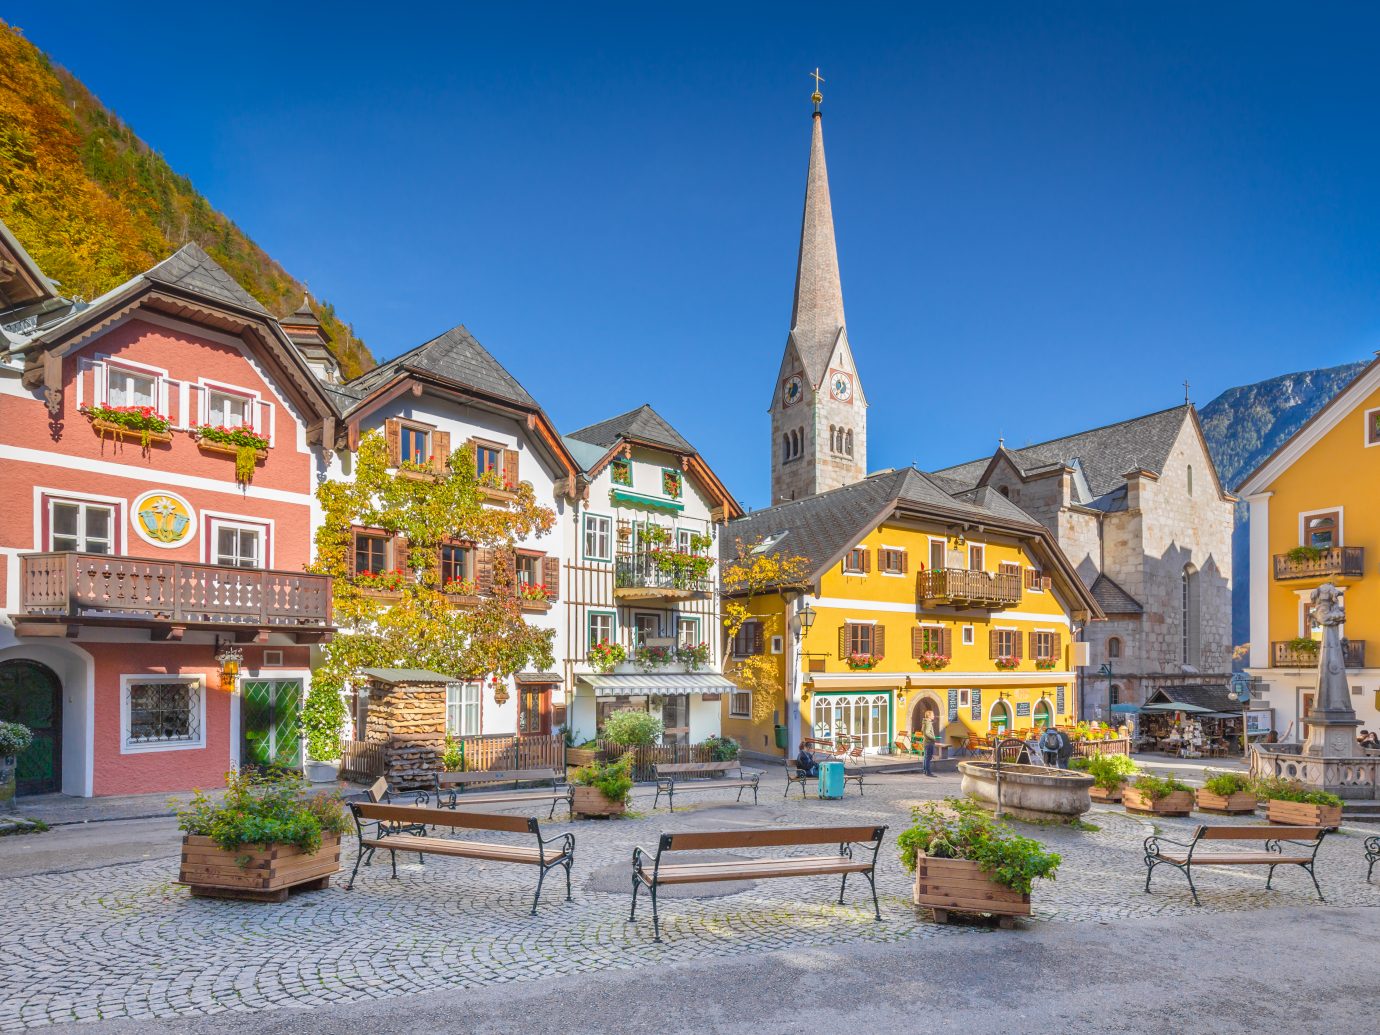 view of the historic town square of Hallstatt Austria